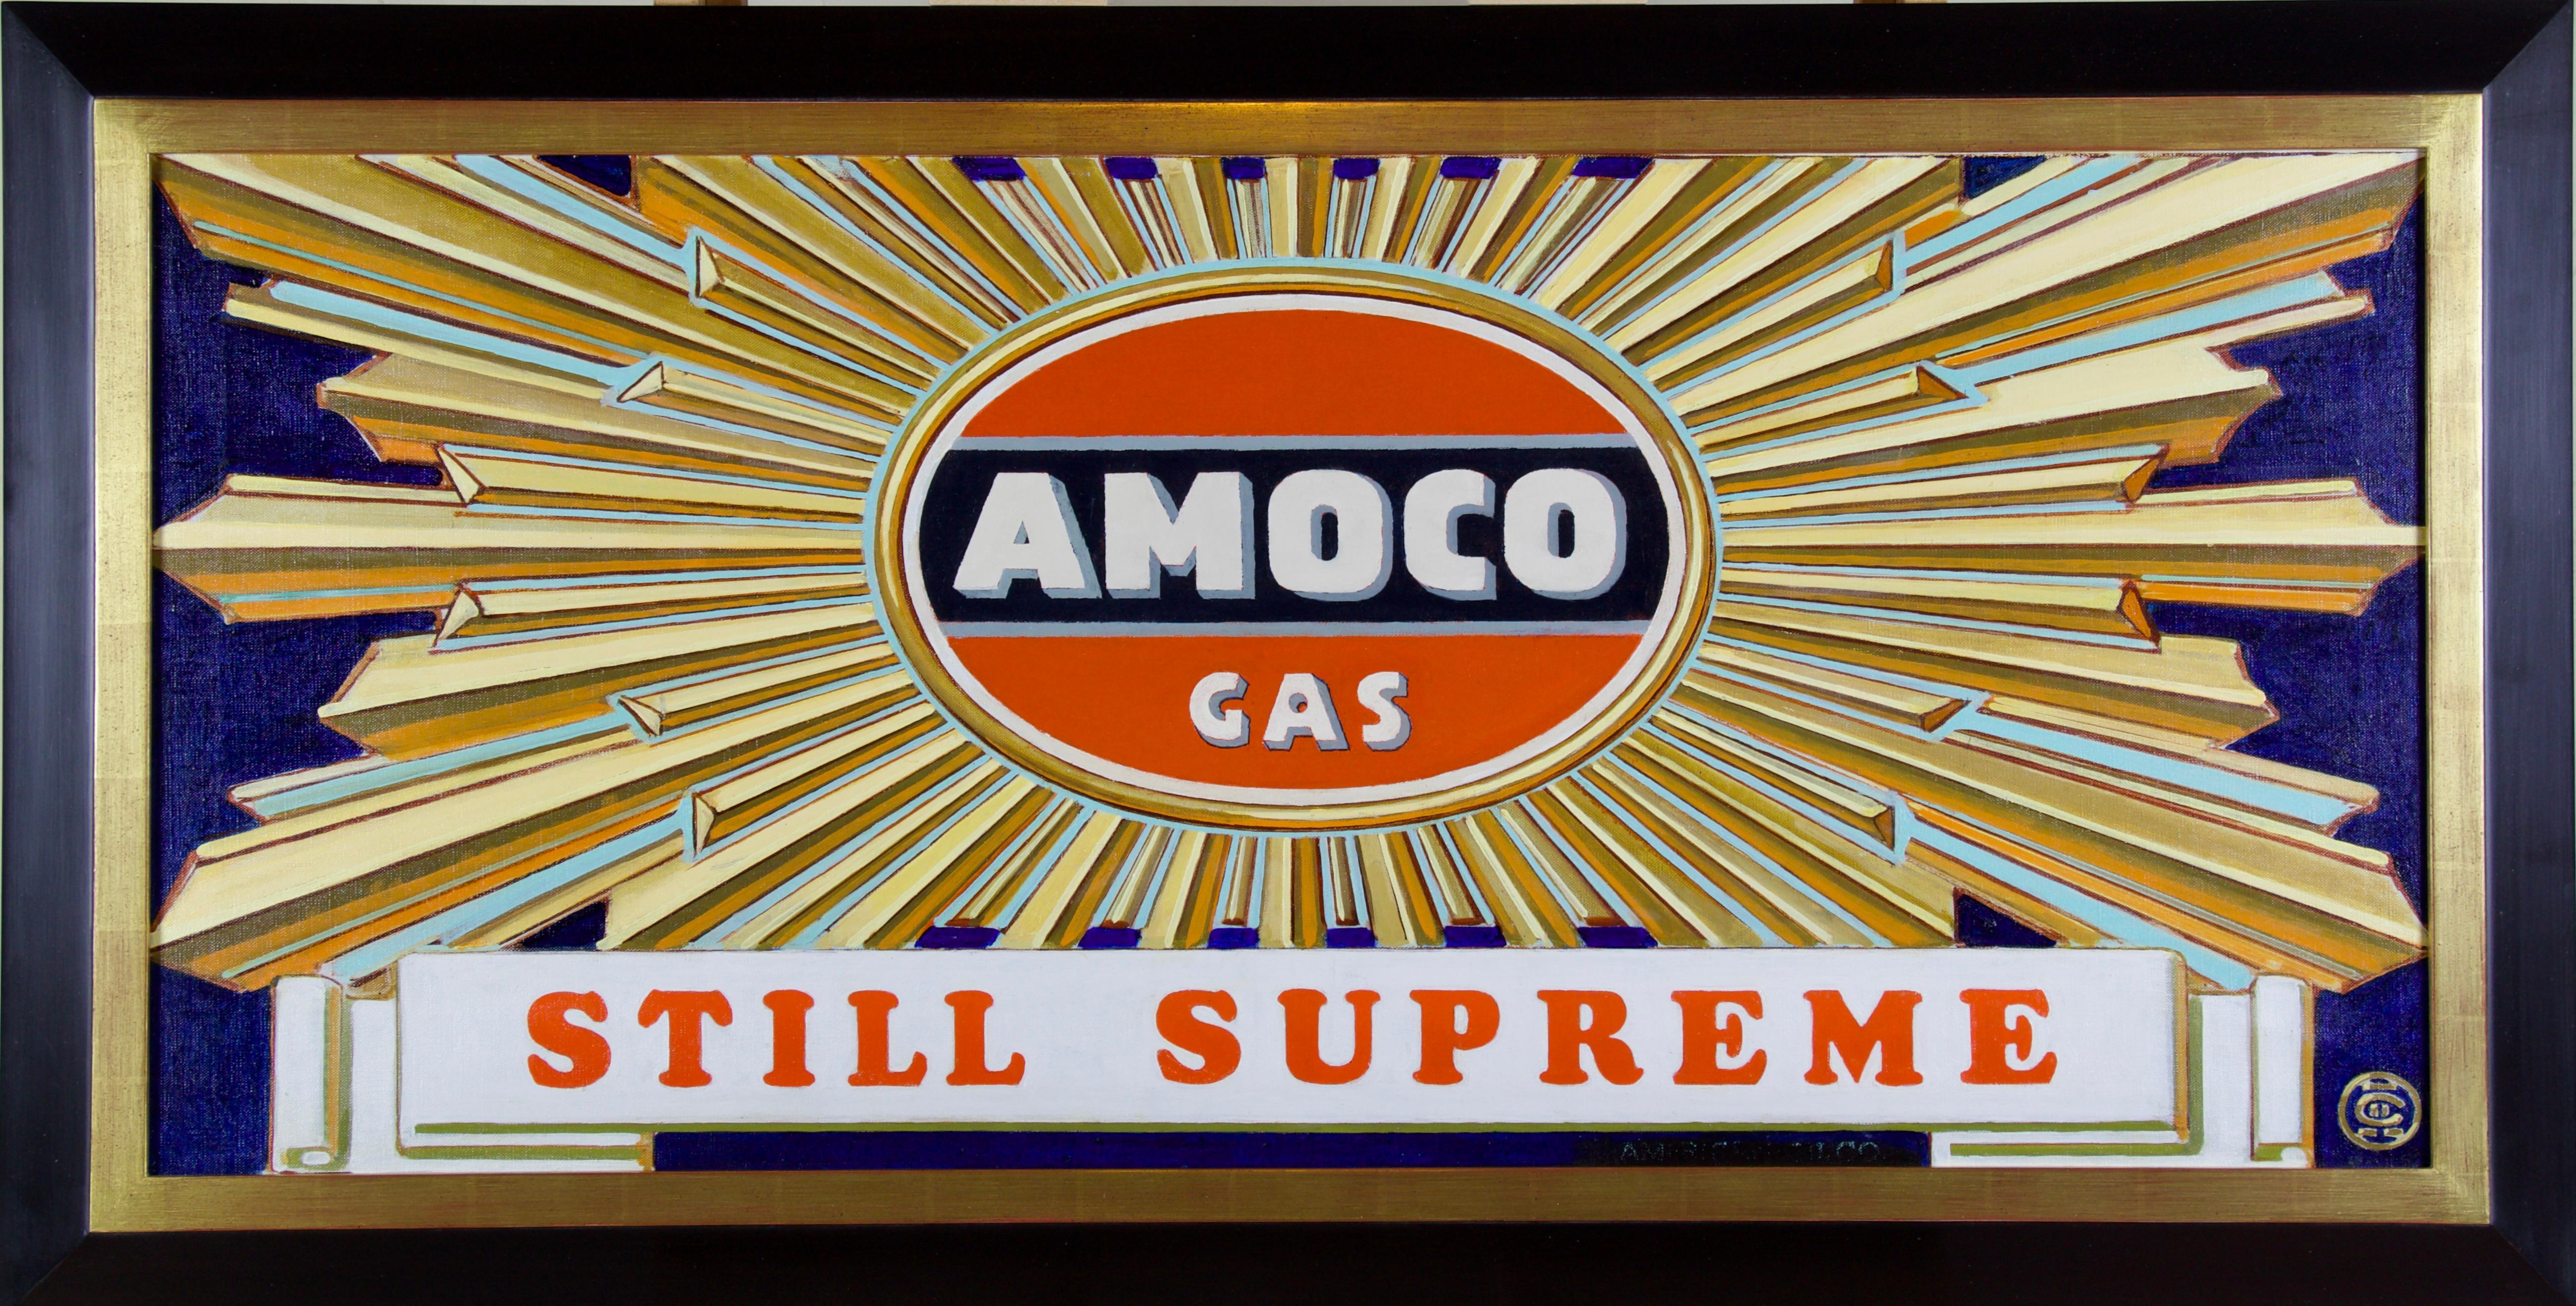 Amoco Gas Advertisement - Painting by Joseph Christian Leyendecker